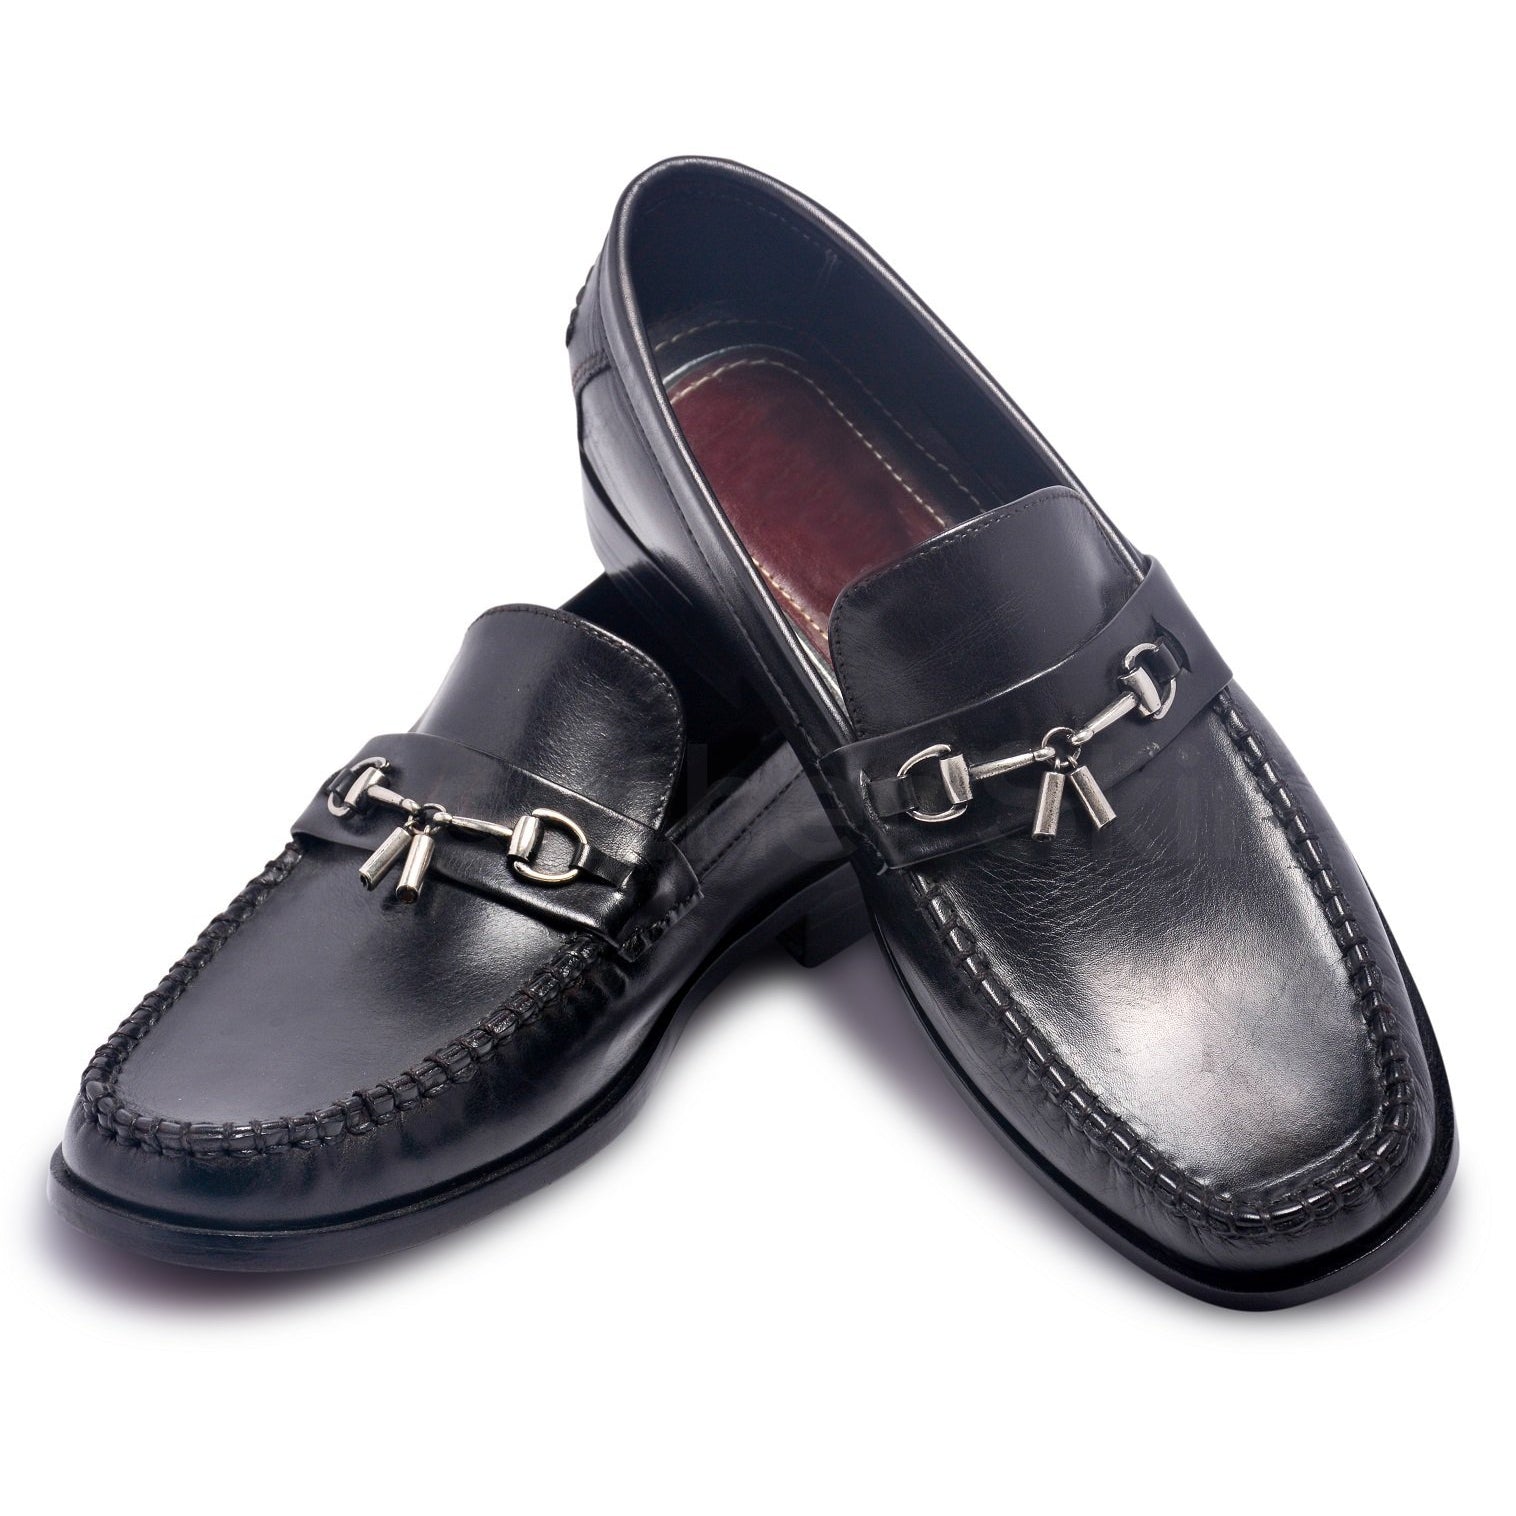 Bit Loafer Slip-On Genuine Shoes with Metal Tassels for Mens